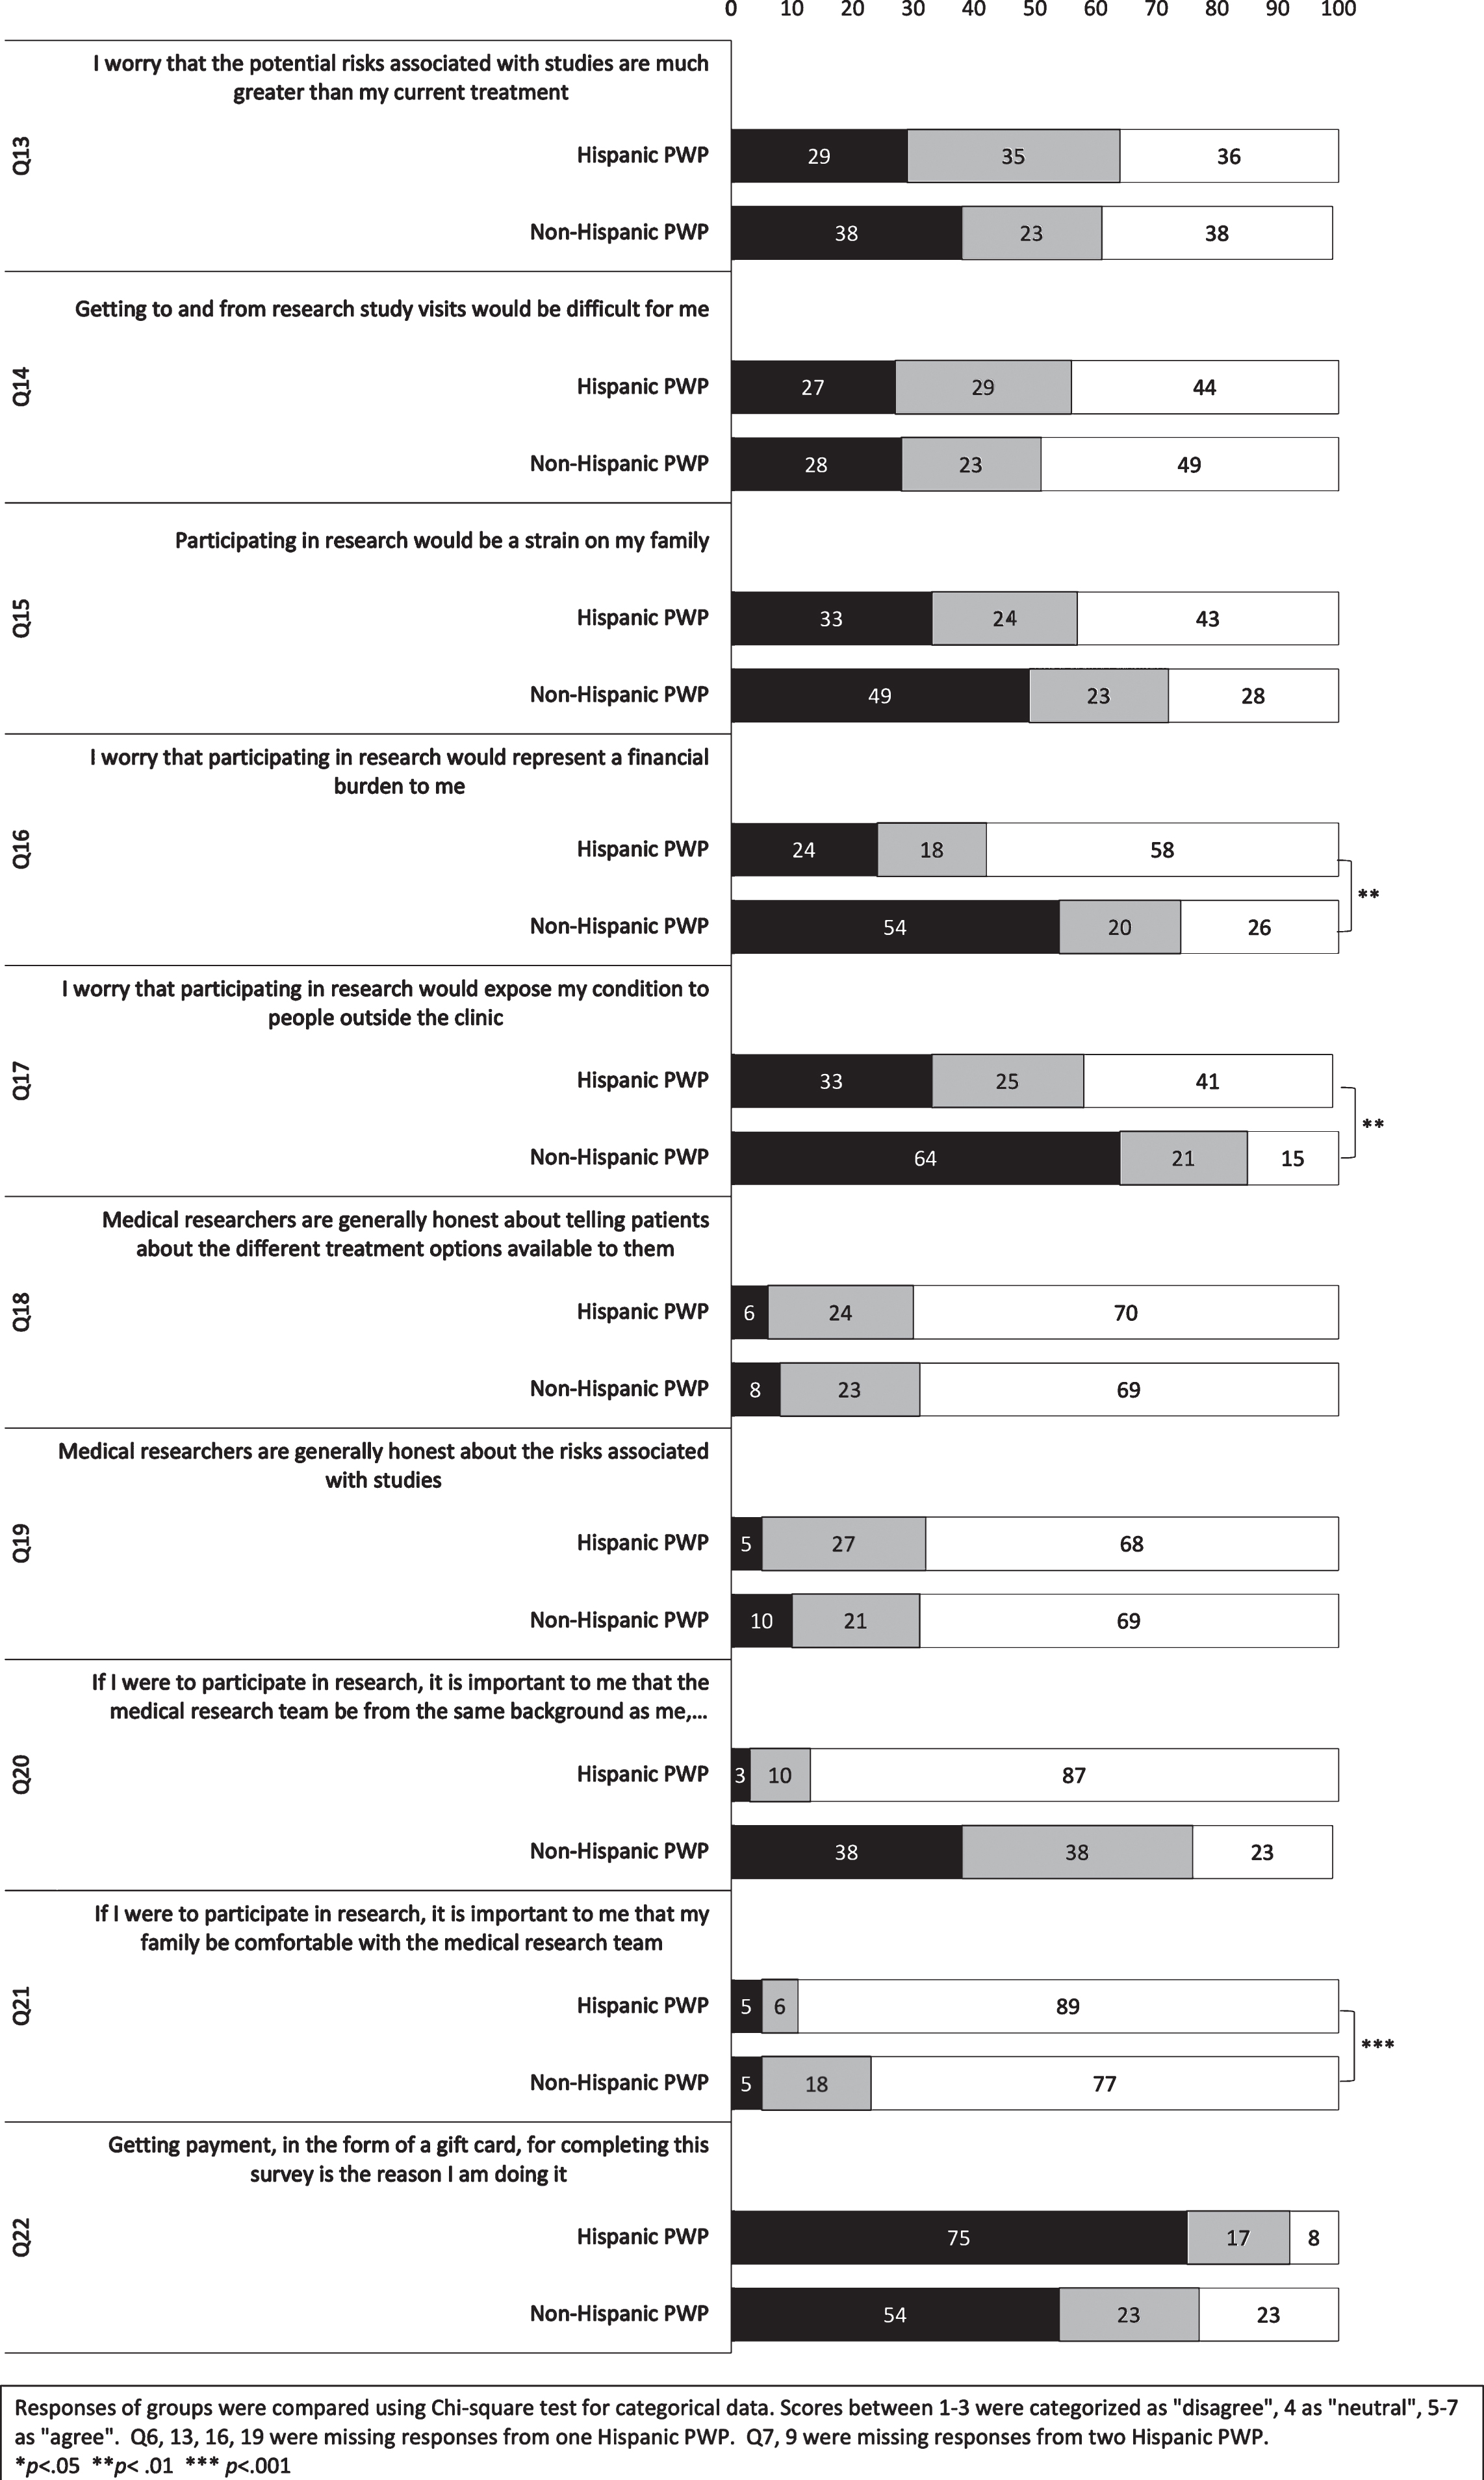 Survey responses of Hispanic and non-Hispanic PWP compared using ordinal data.